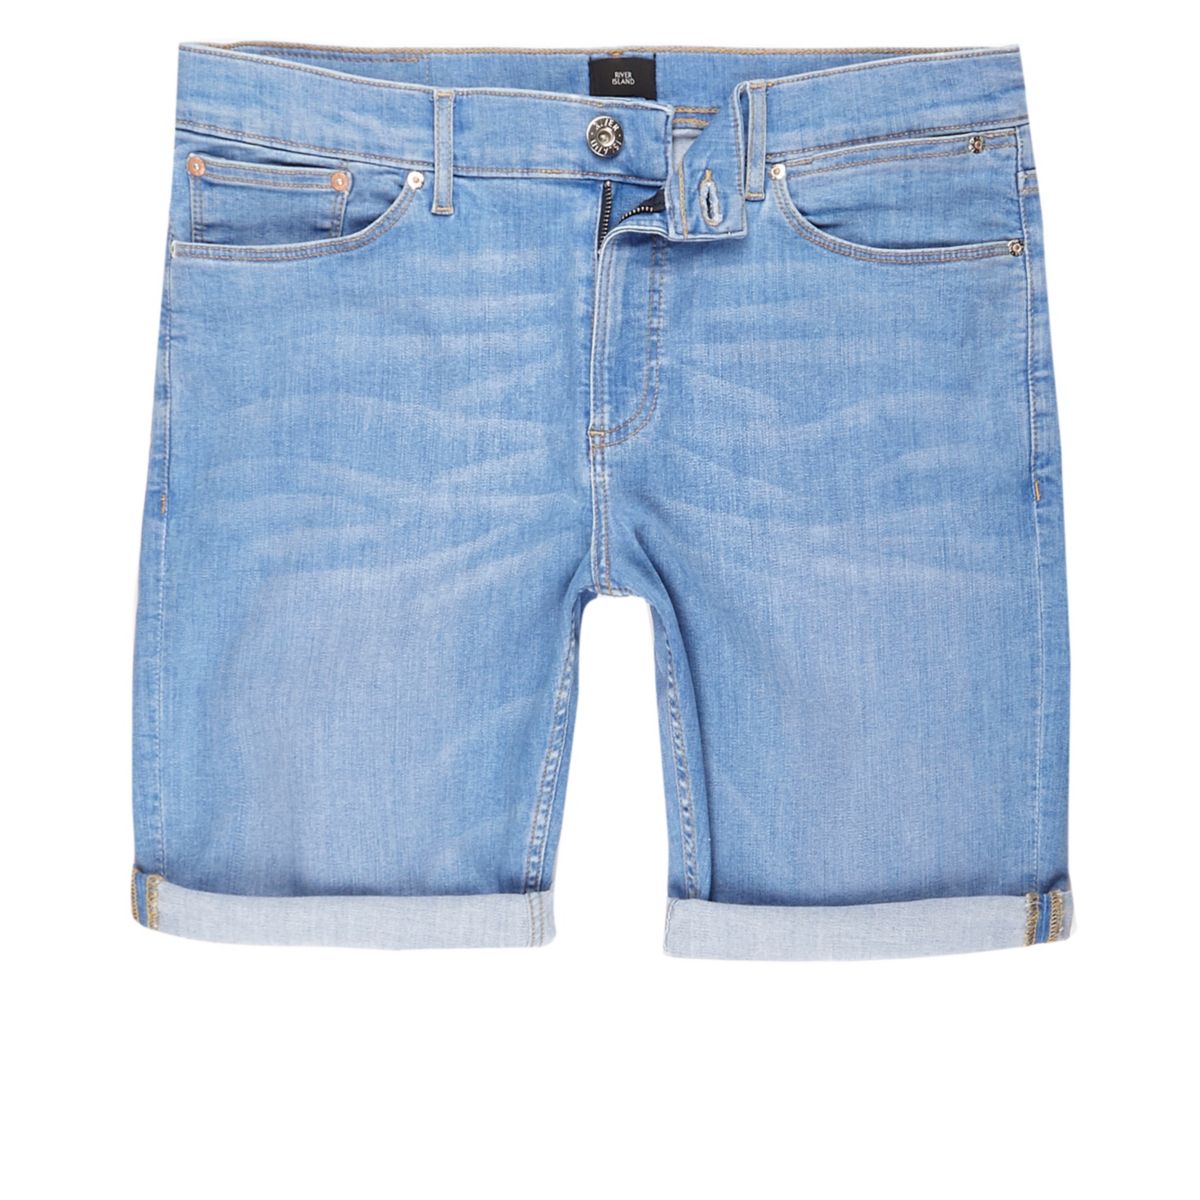 Light blue skinny denim shorts - Shorts - Sale - men